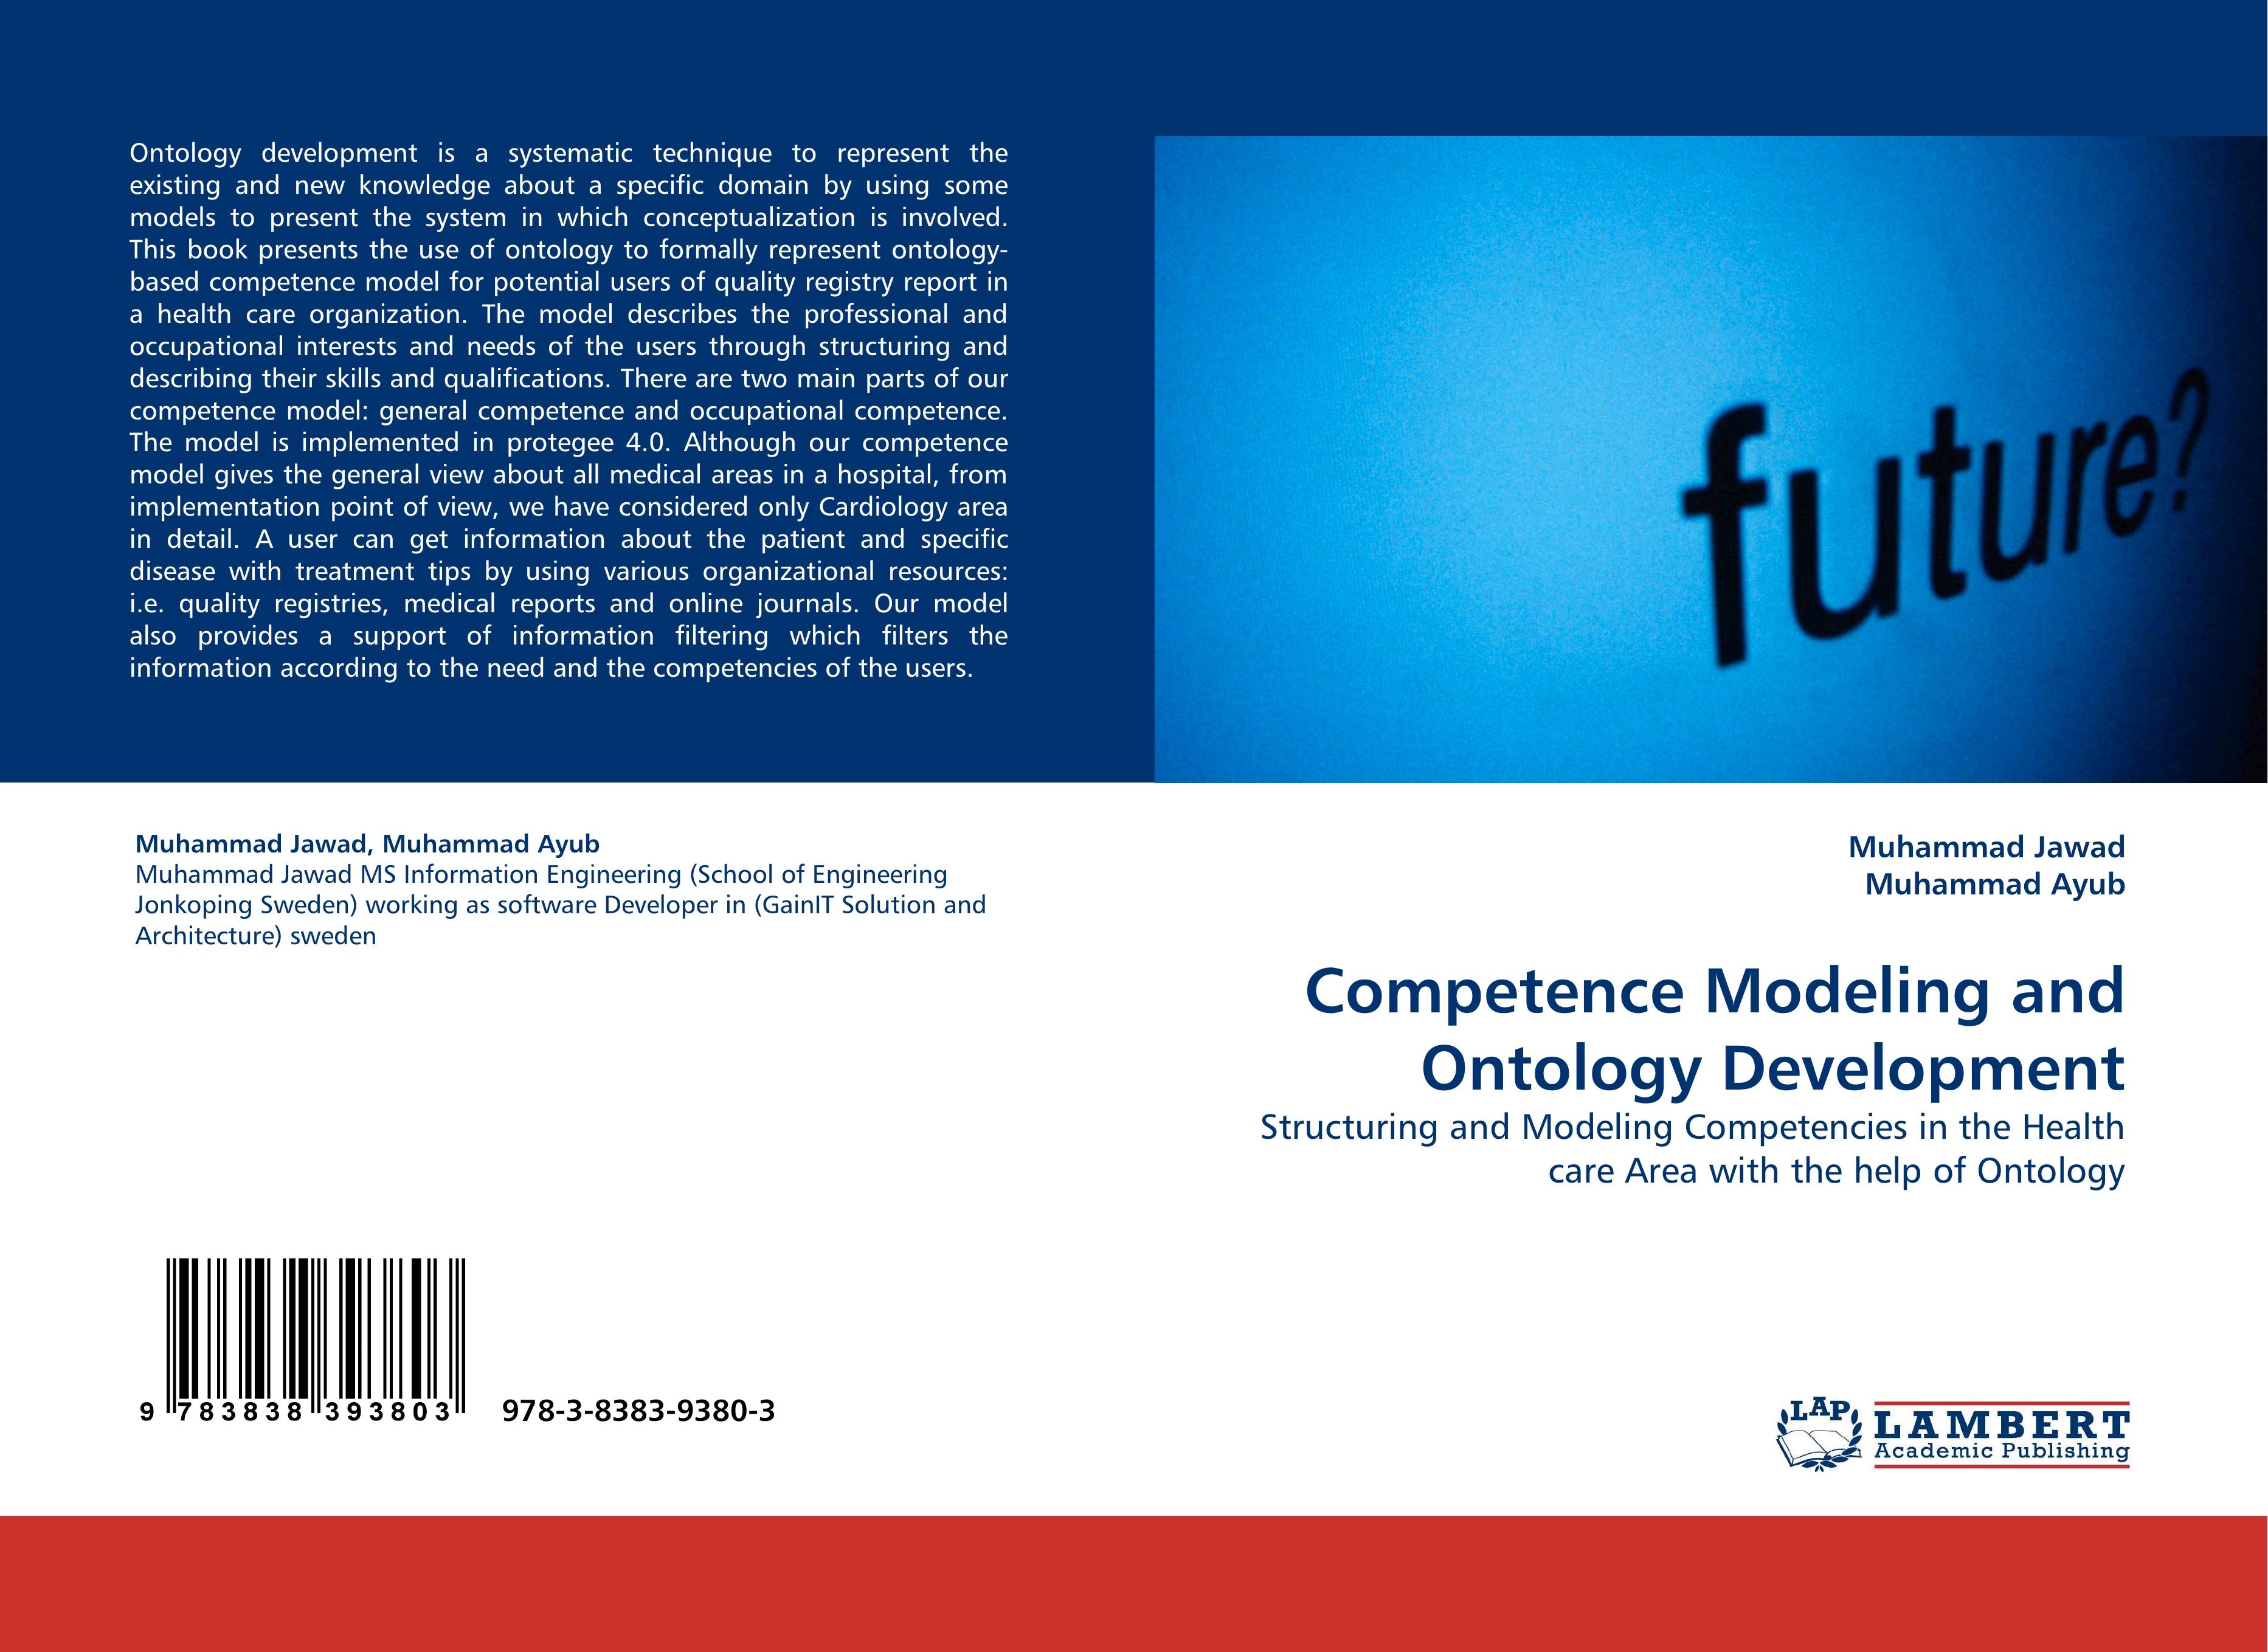 Competence Modeling and Ontology Development - Jawad, Muhammad|Ayub, Muhammad